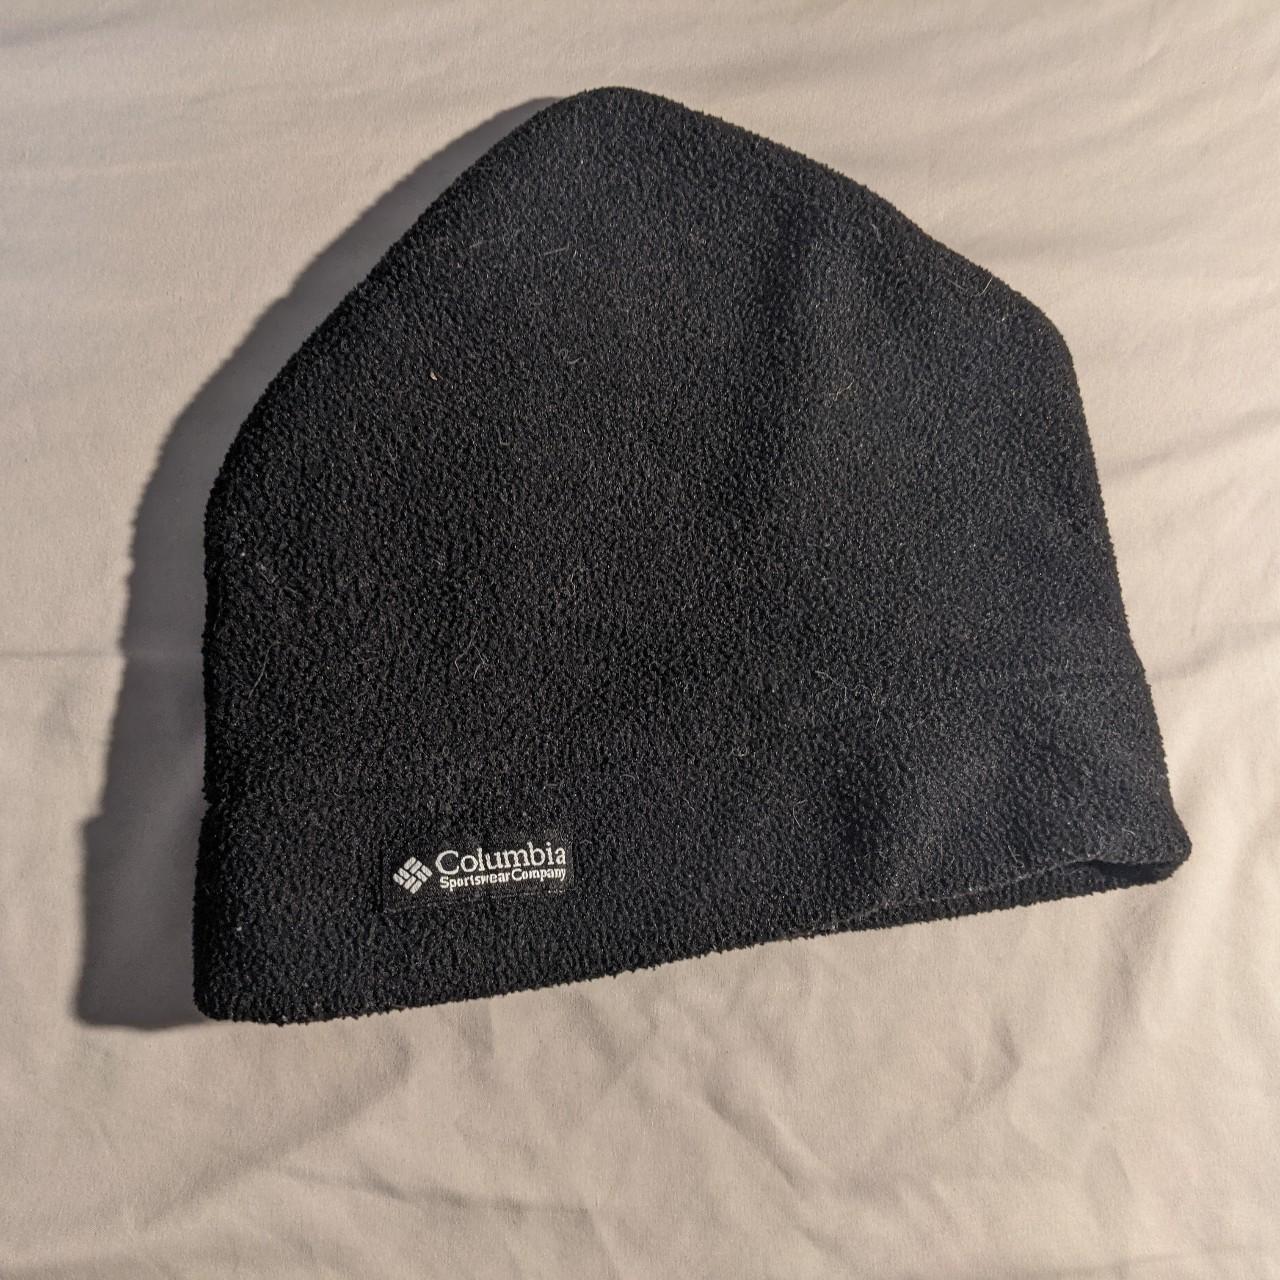 Vintage 90s Columbia fleece hat, Warm, Fits M/L sized...